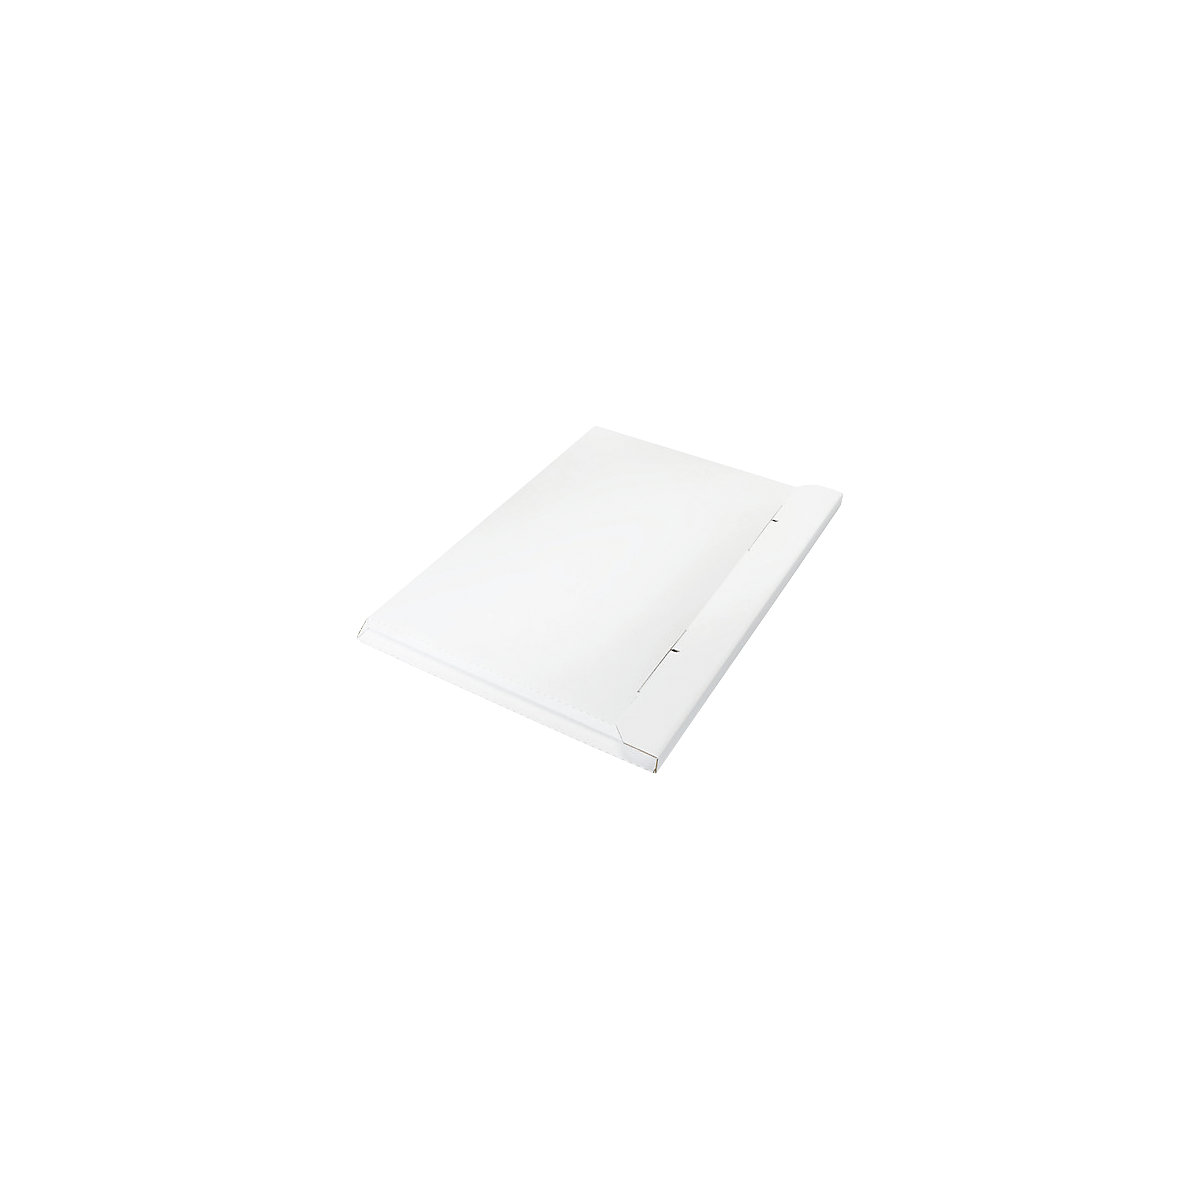 Flach-/Kalender-Pack, 1-wellig, Innen-LxBxH 570 x 395 x 10 mm, weiß, ab 200 Stk-6